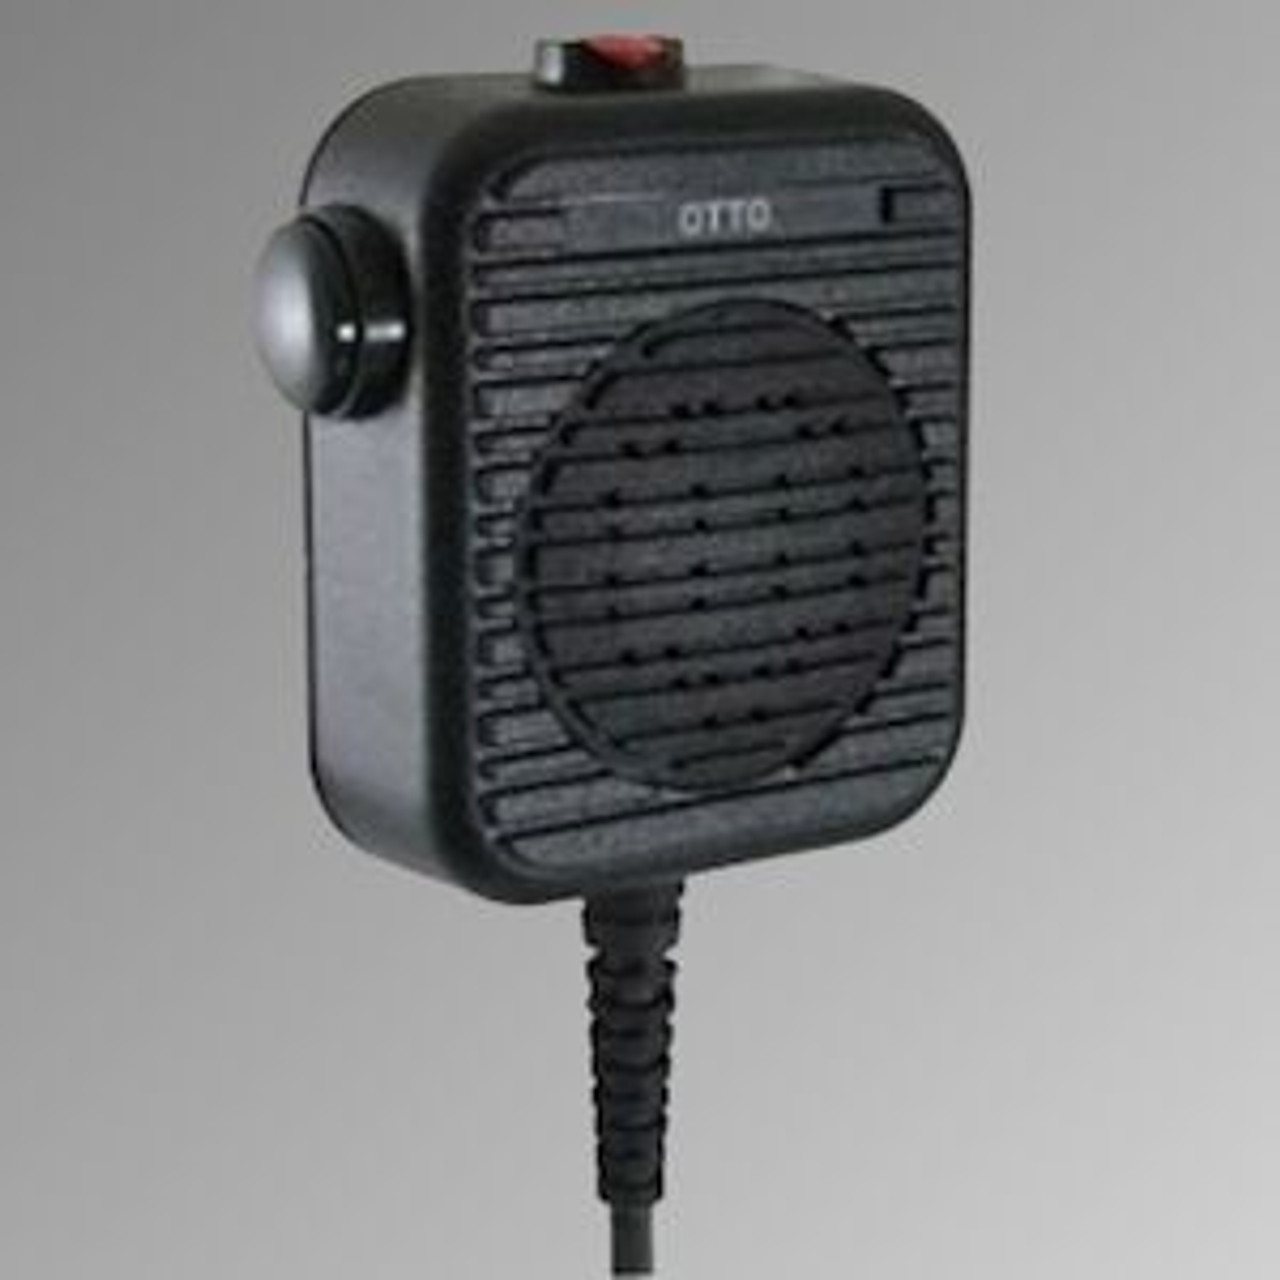 Otto Genesis II Ruggedized Speaker Mic For Harris P5300